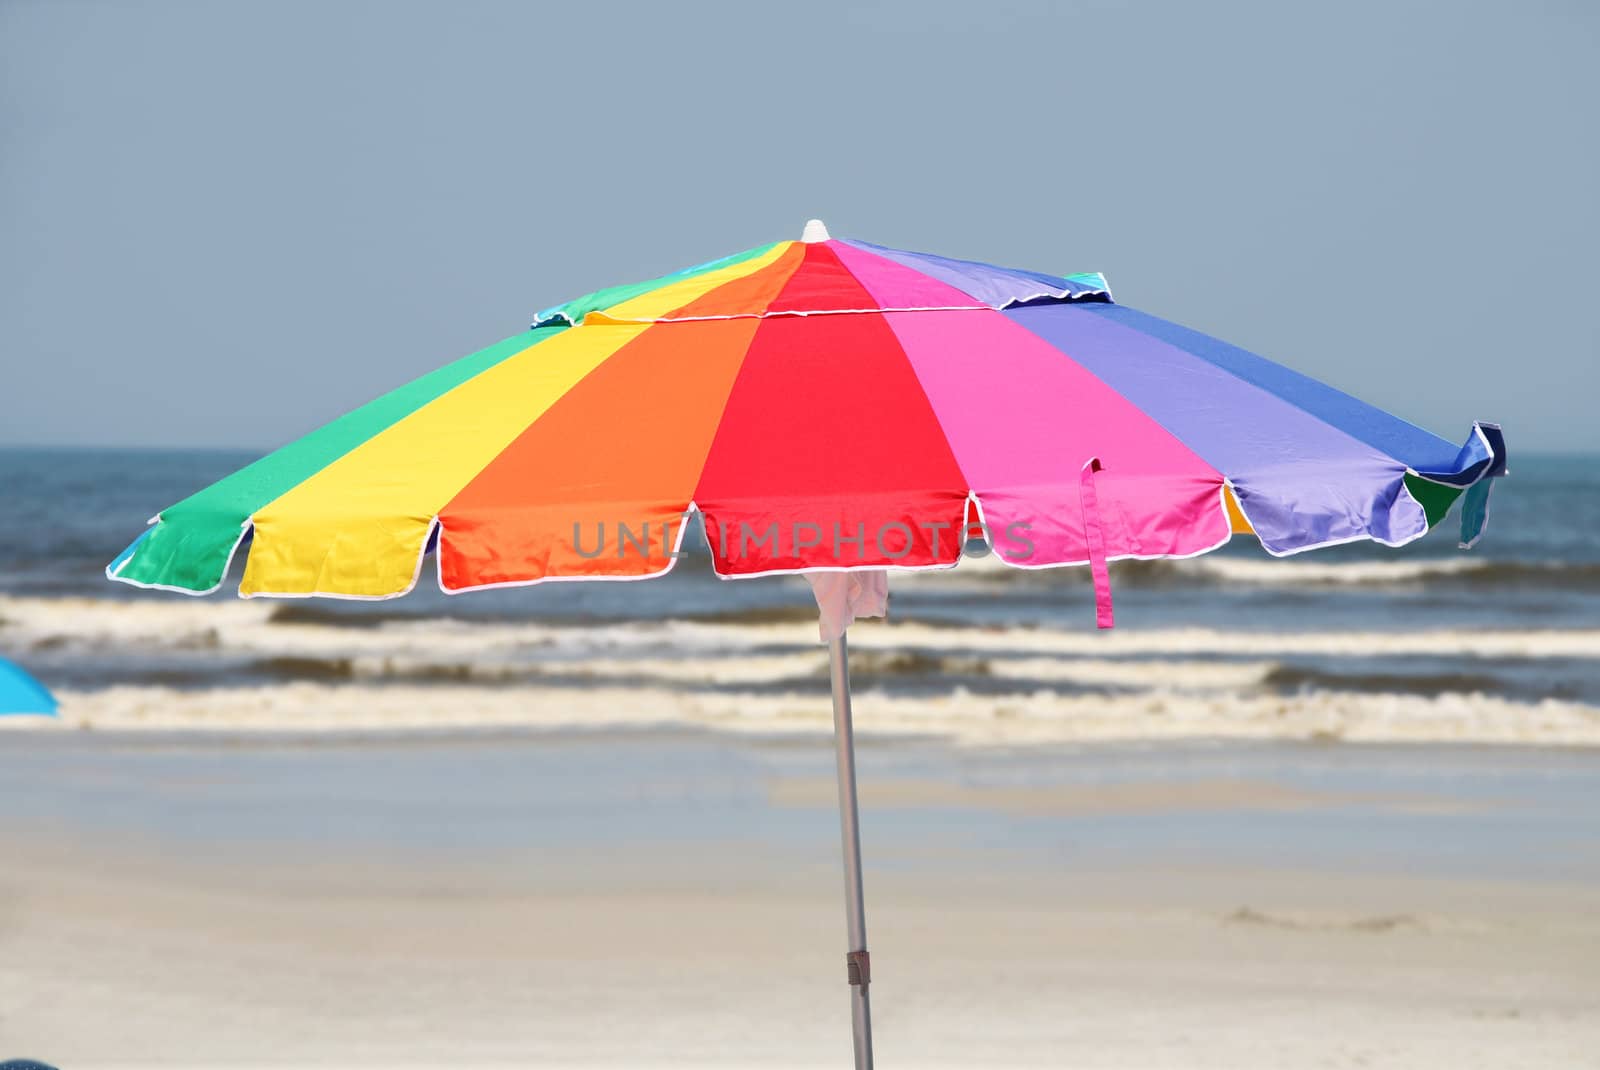 Colorful umbrella on  the beach